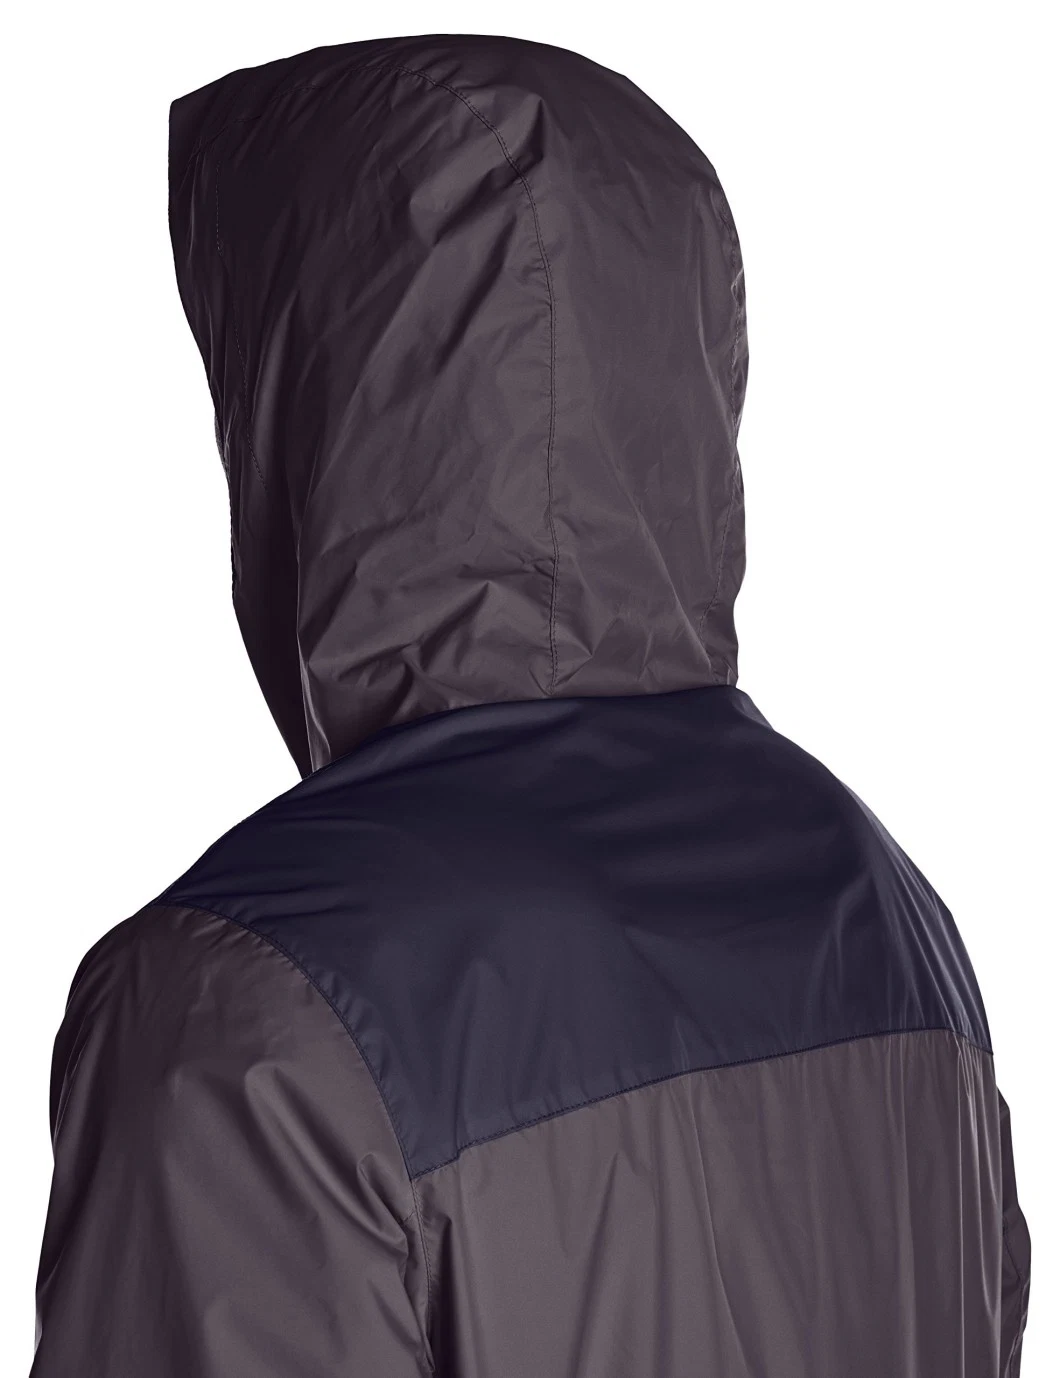 Fashion Outdoor Motorcycle Rain Coat Clothing Lining Mountain Climbing Raincoat Waterproof Windproof Rain Jacket